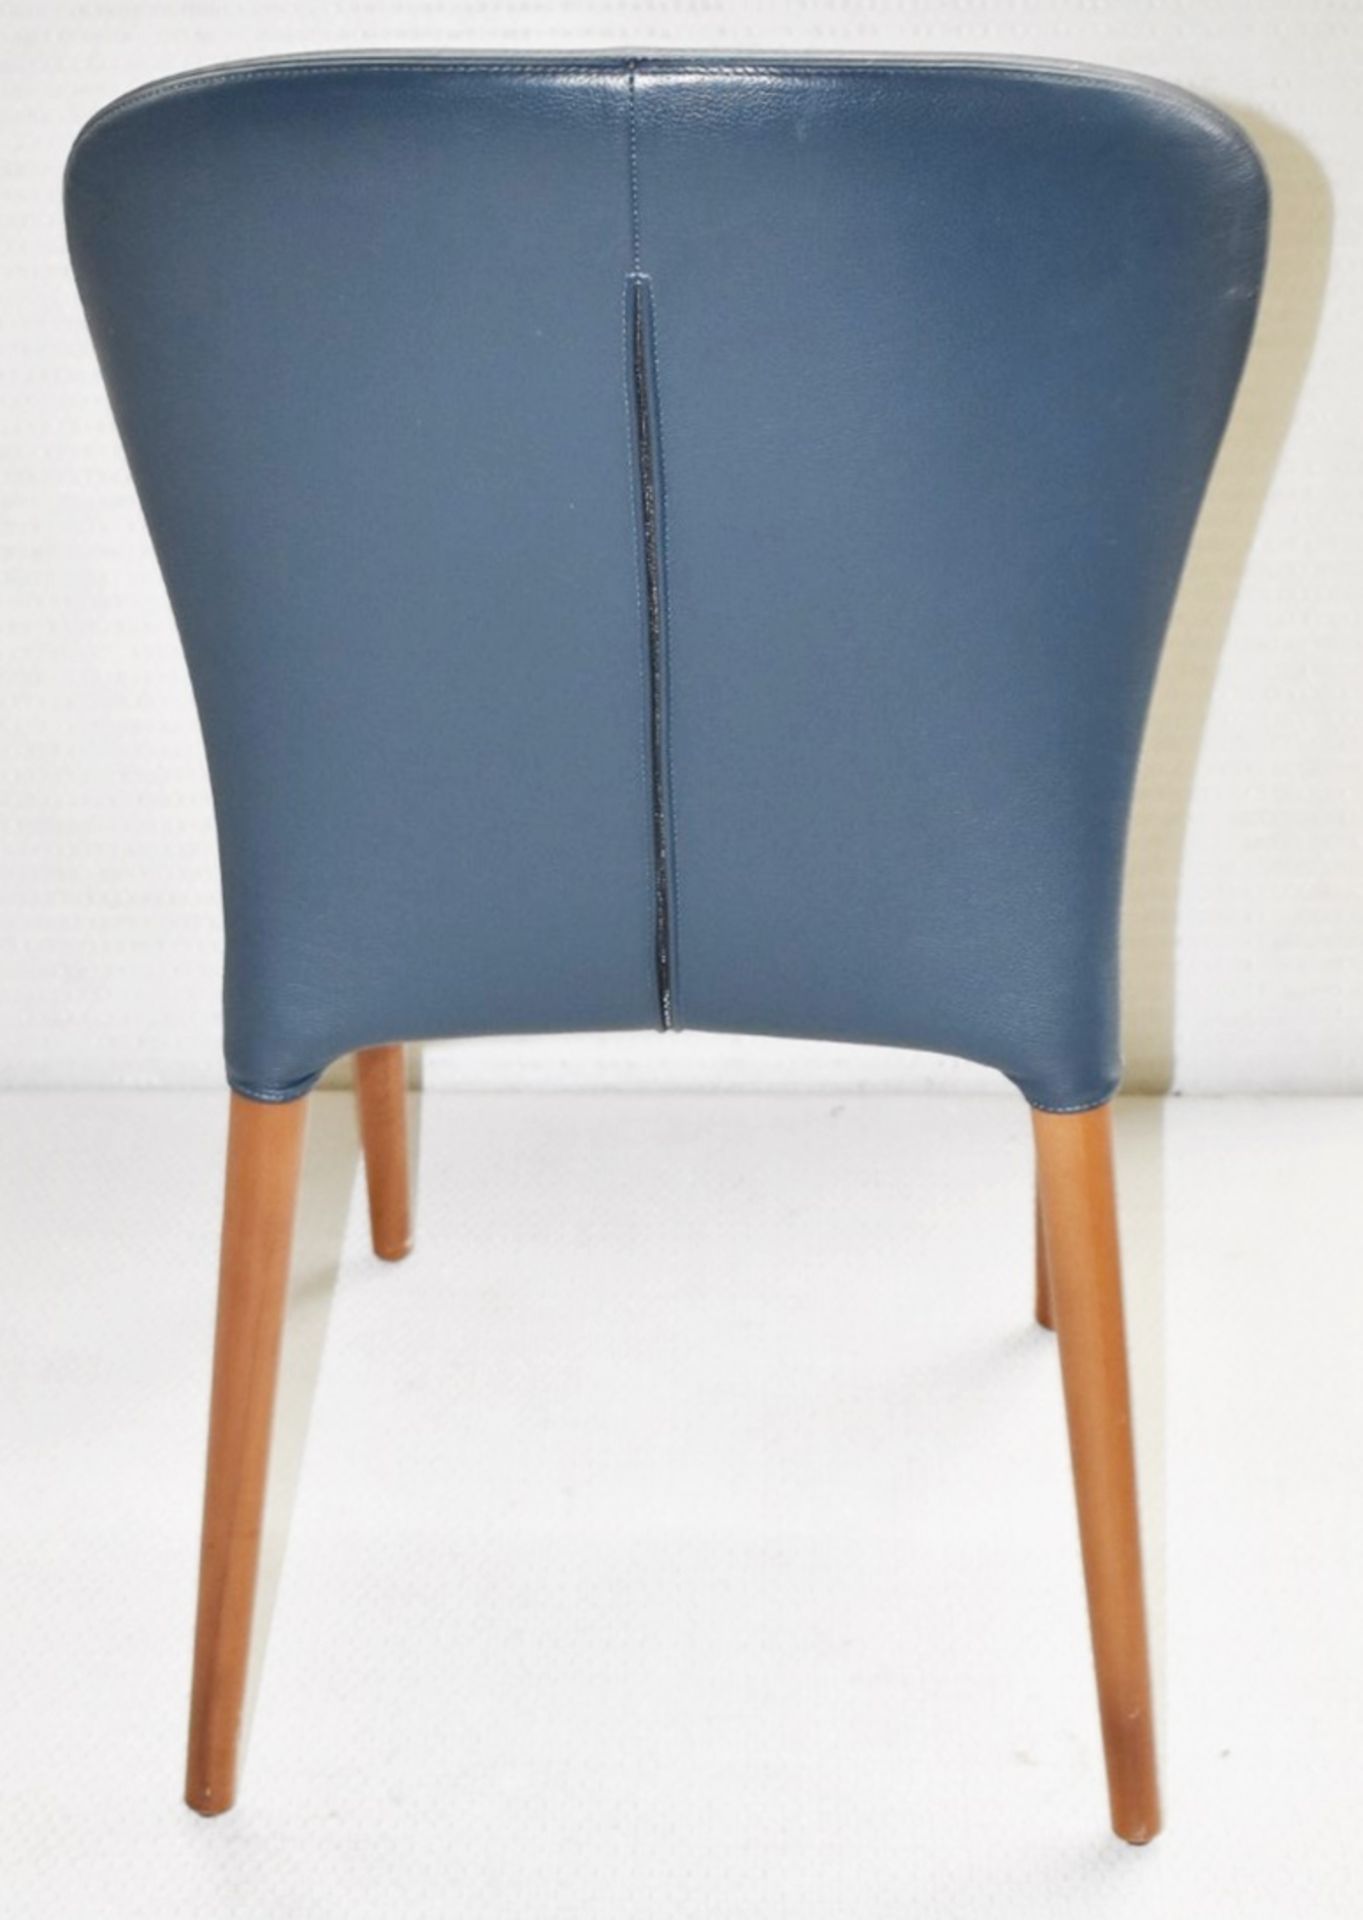 1 x PORADA 'Astrid' Italian Designer Leather Upholstered Chair, In Blue - Original Price £1,110 - Image 5 of 5